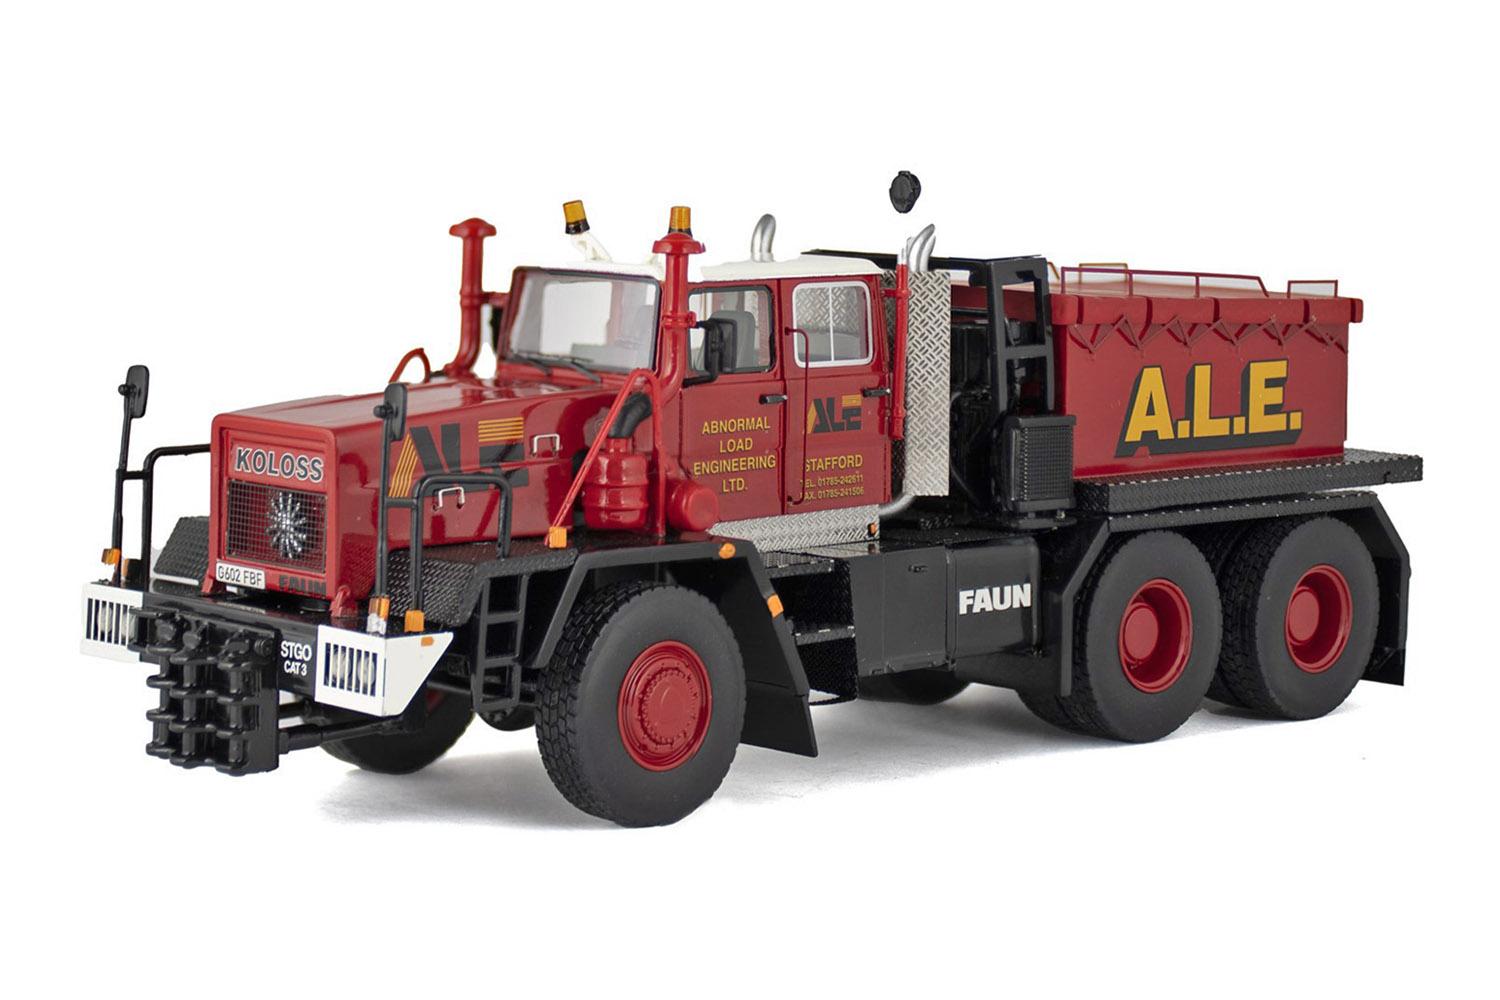 Faun Koloss 6x6 Heavy Truck - ALE